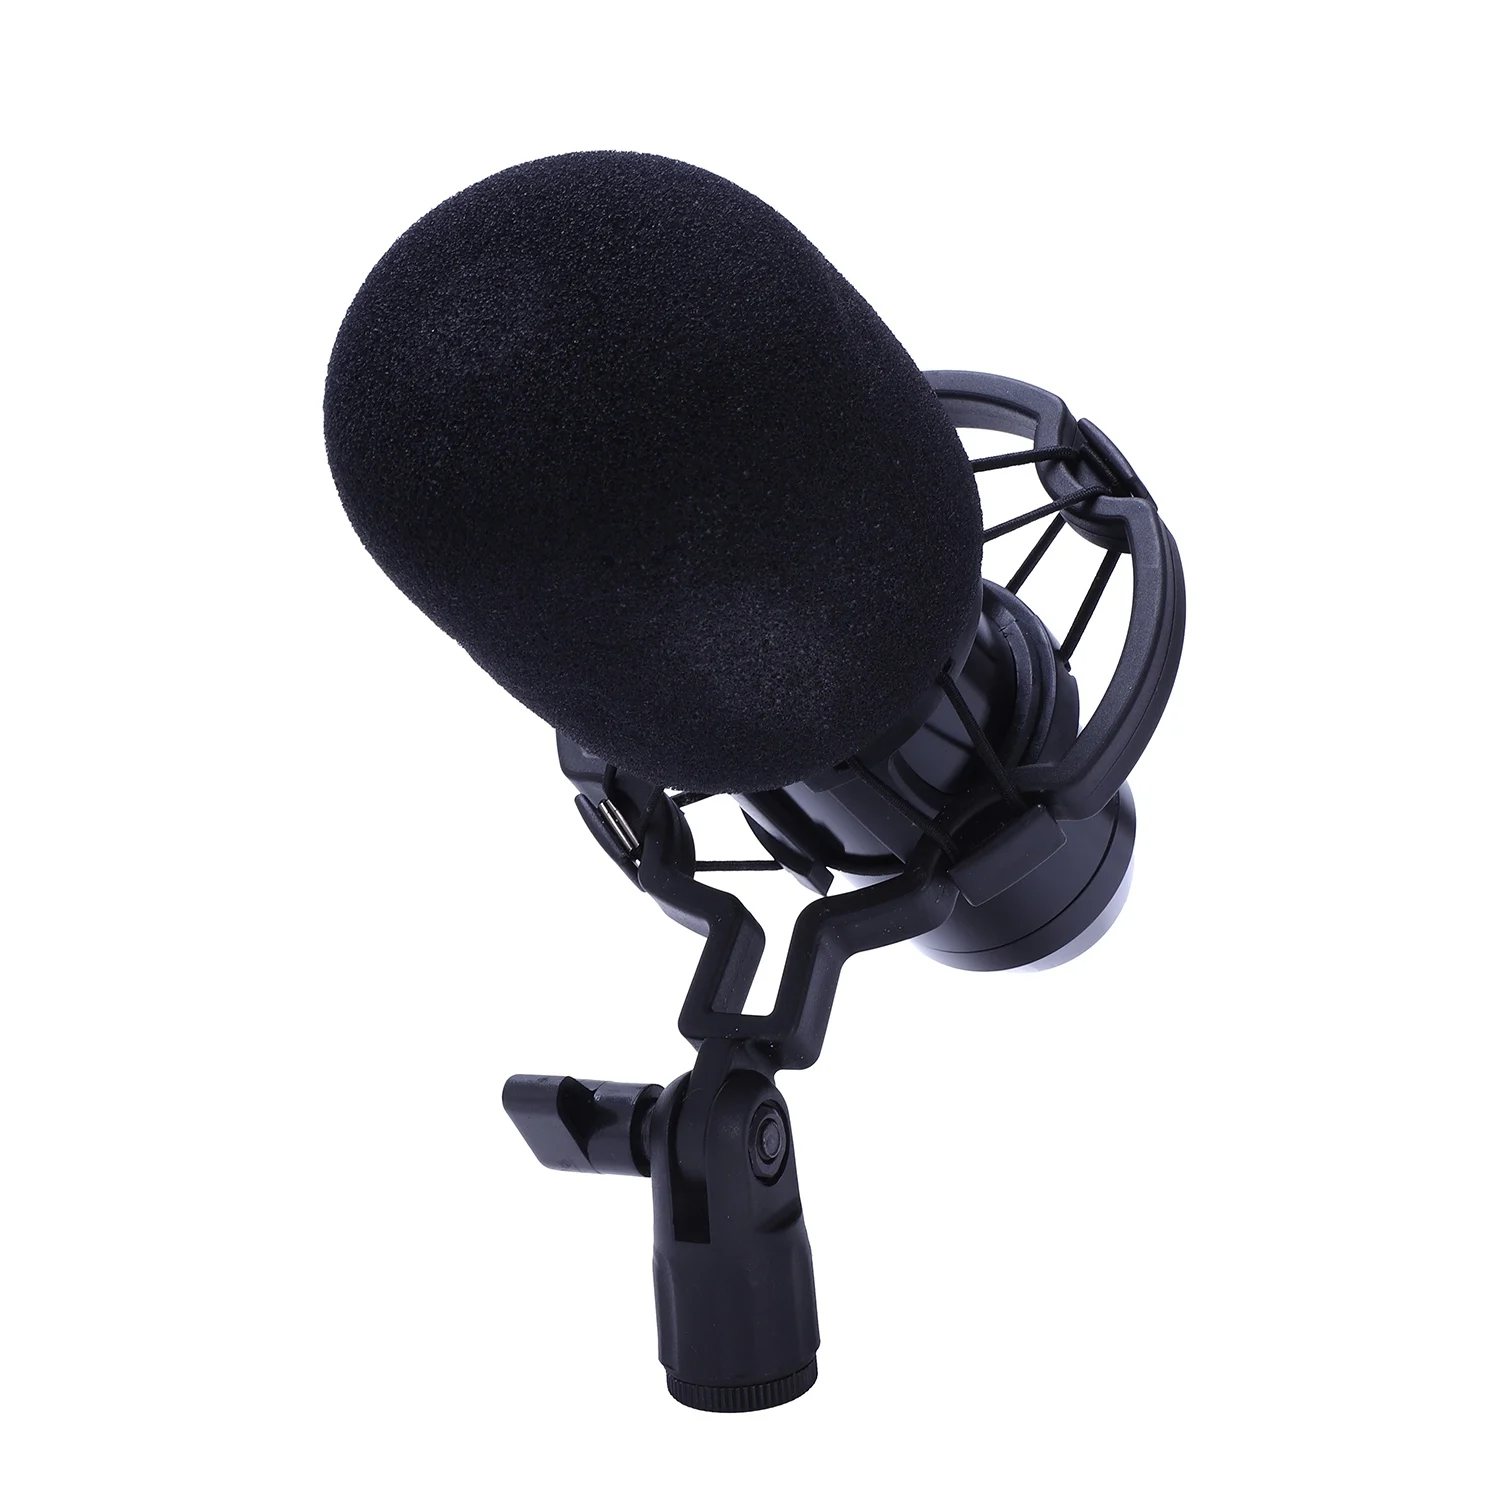 

BM 800 Karaoke Capacitor Microphone With Shock Mount Condenser Microphone Mic Kit For Radio Sound Recording KTV Singing(Black)